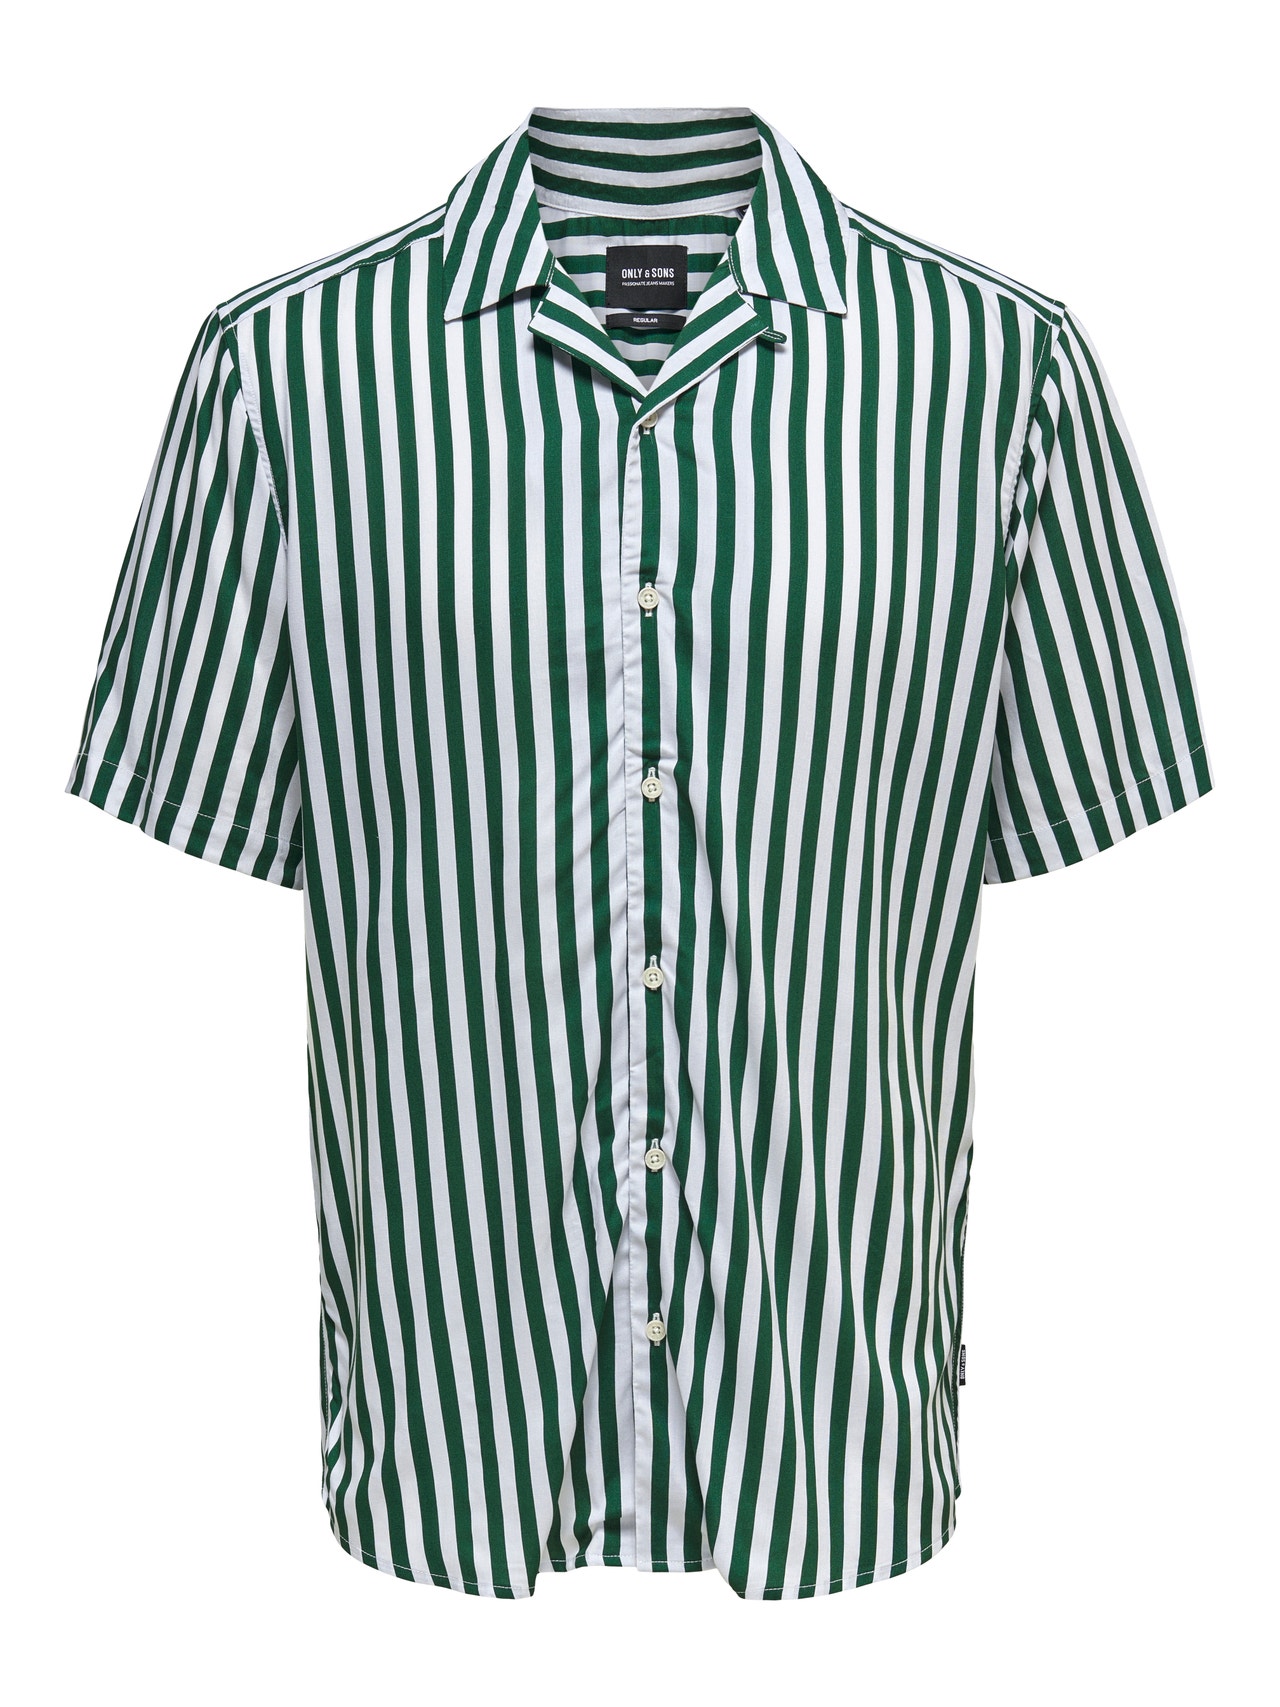 ONLY & SONS Short sleeved striped shirt -Dark Green - 22013267